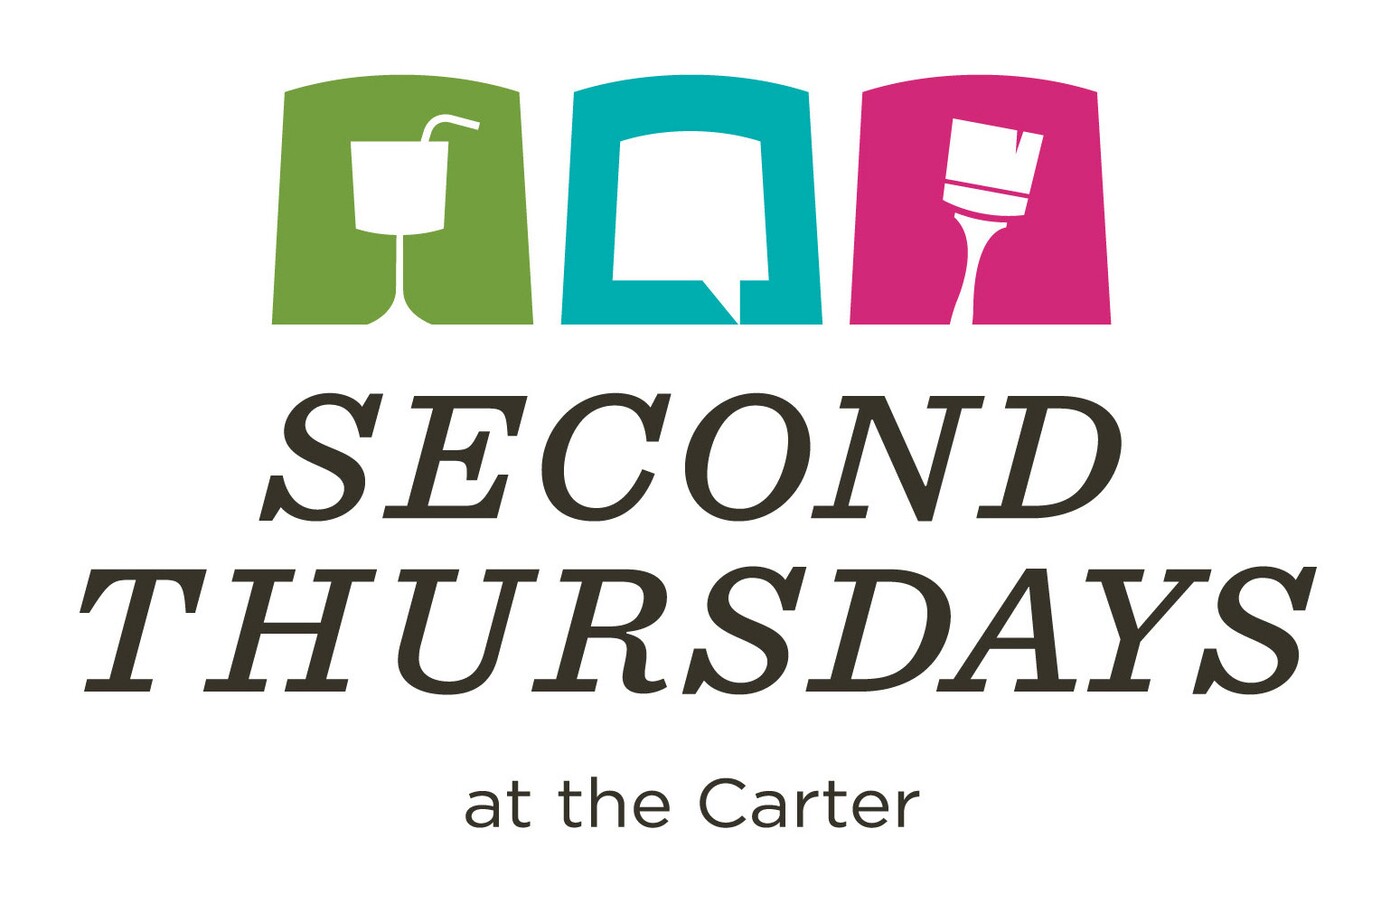 Second Thursdays at the Carter